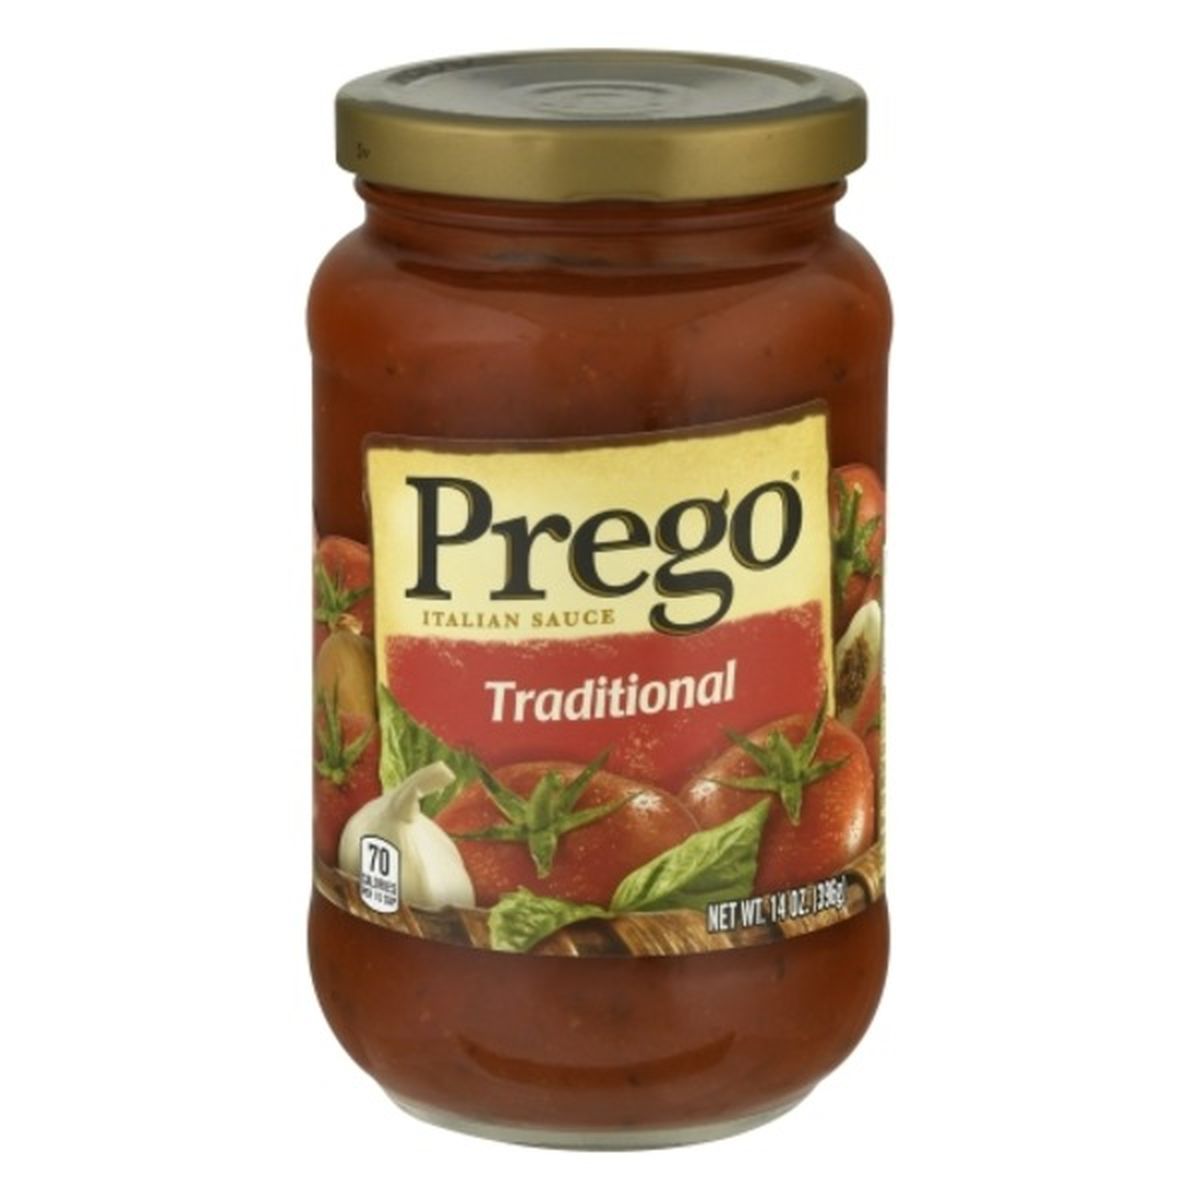 Calories in Pregos Italian Sauce, Traditional